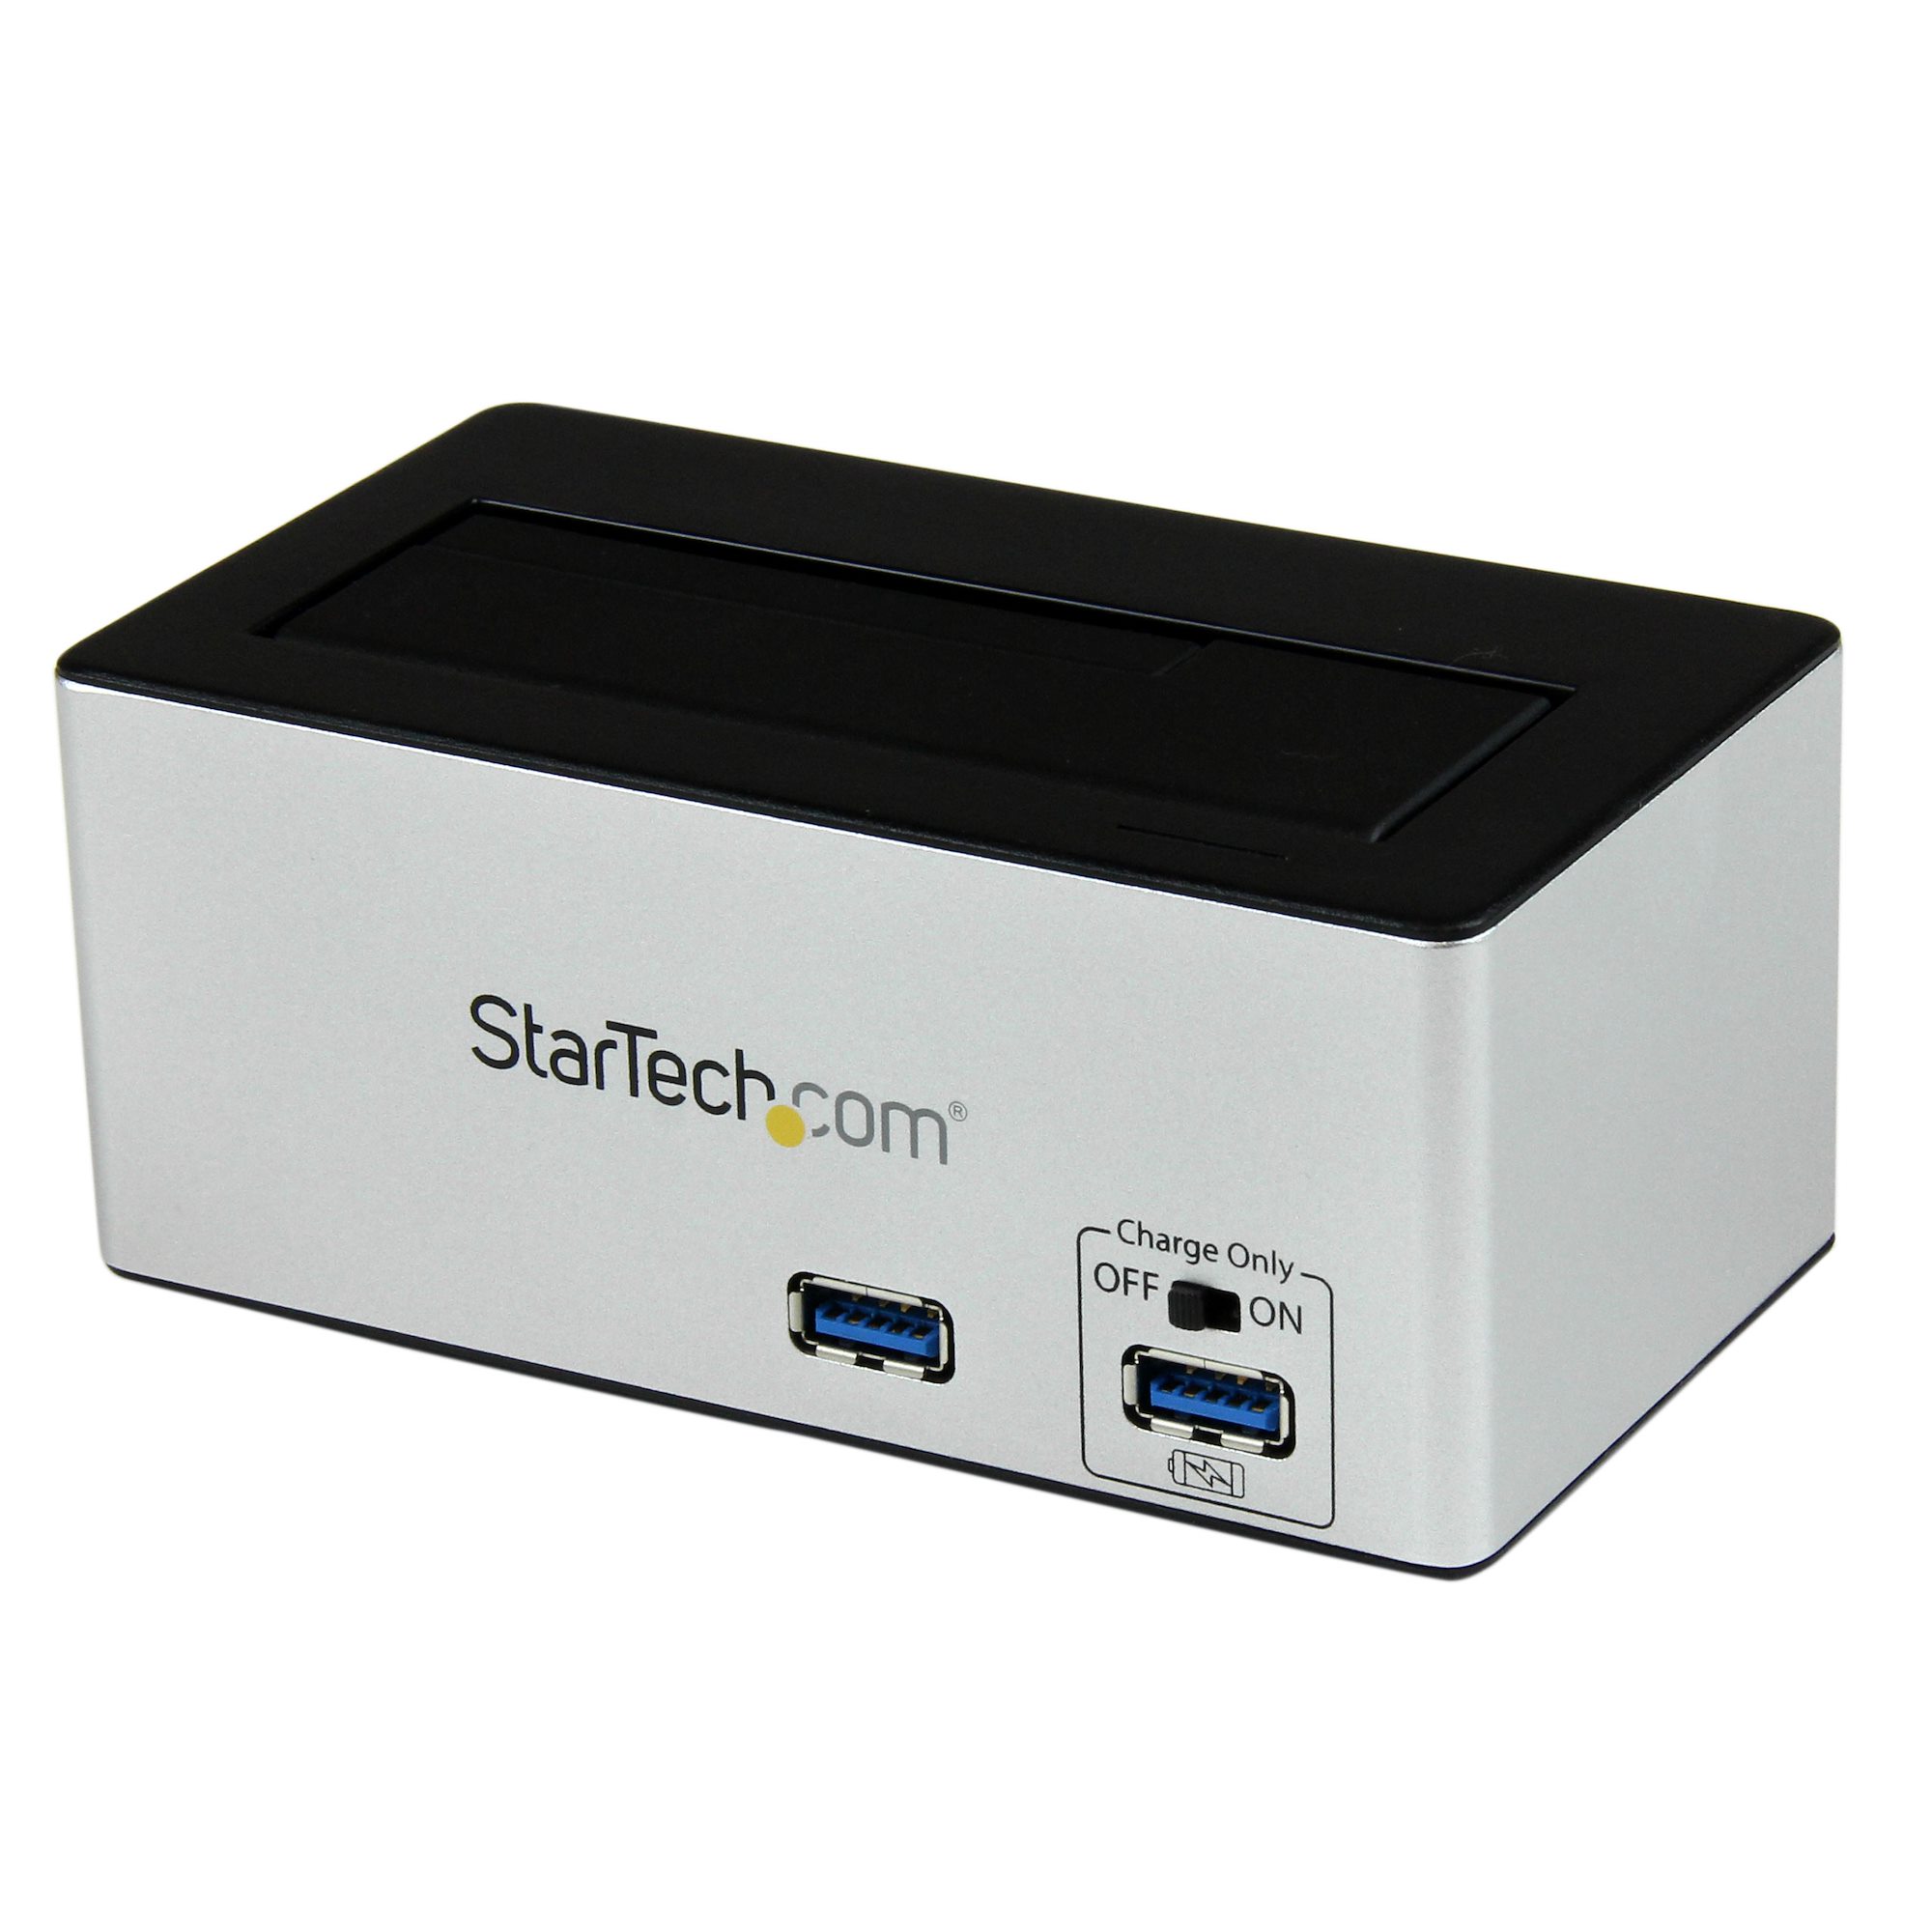 Startech startech.com station d'accueil usb 3.0 disque dur / ssd